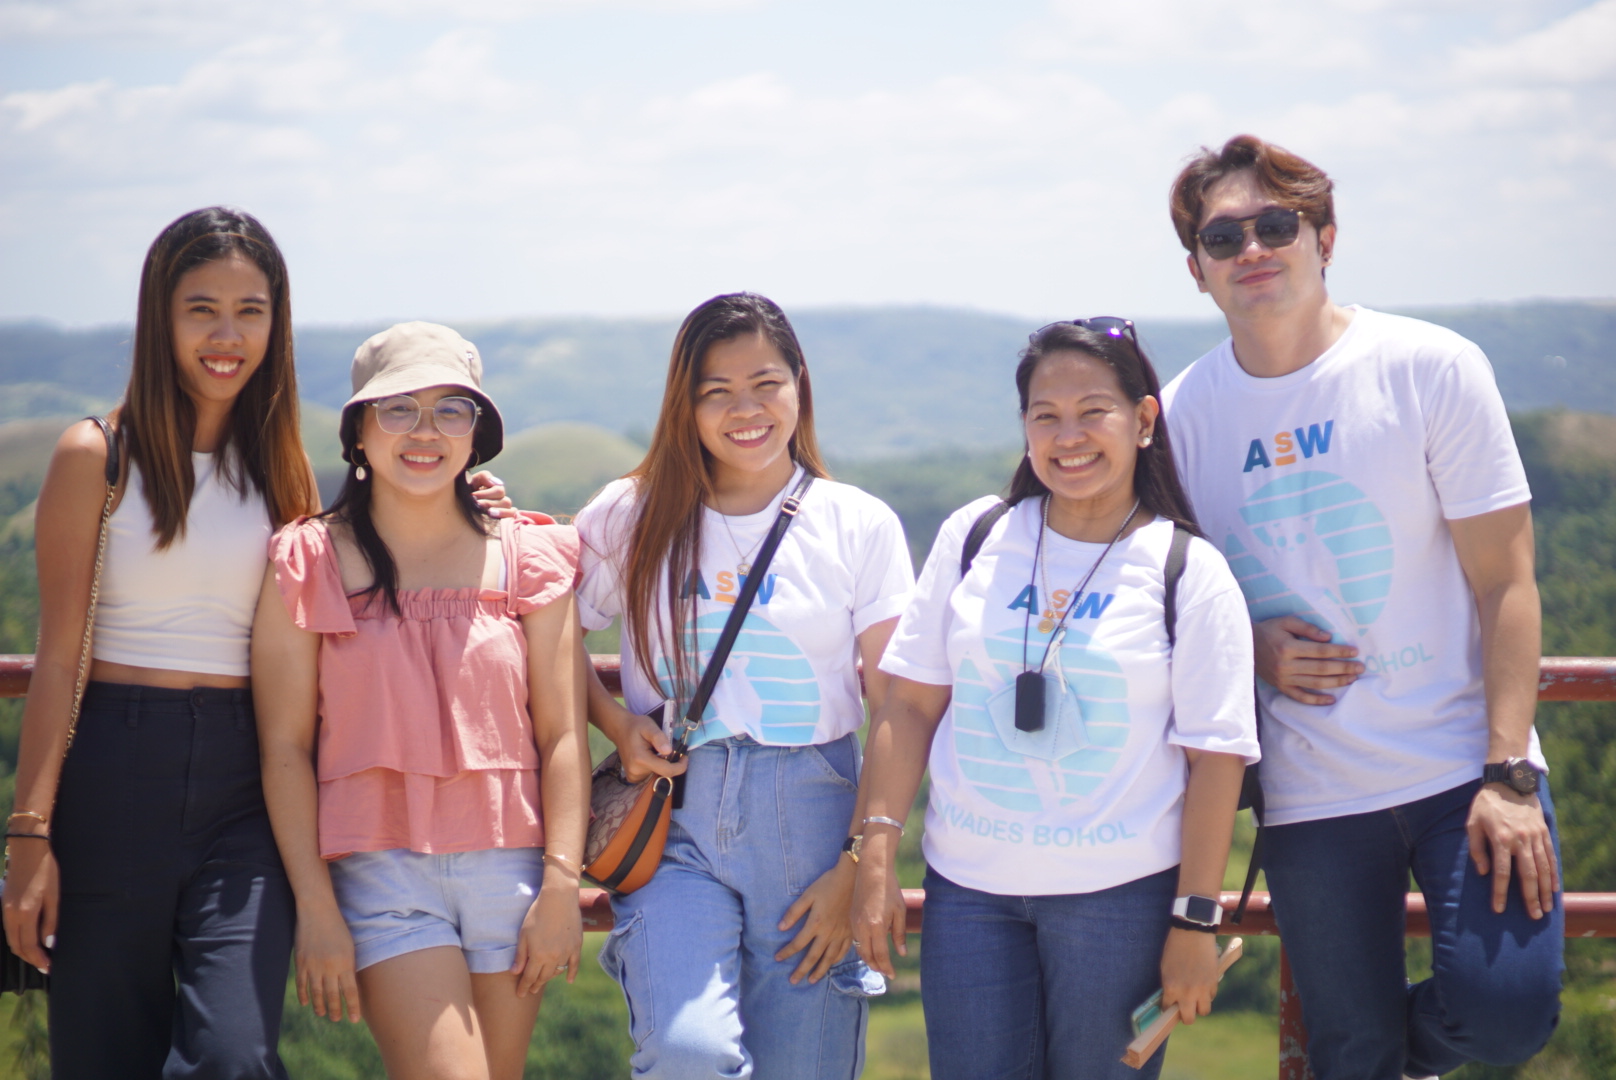 ASW Global Philippines Company Trip at Henan Resort in Bohol 3